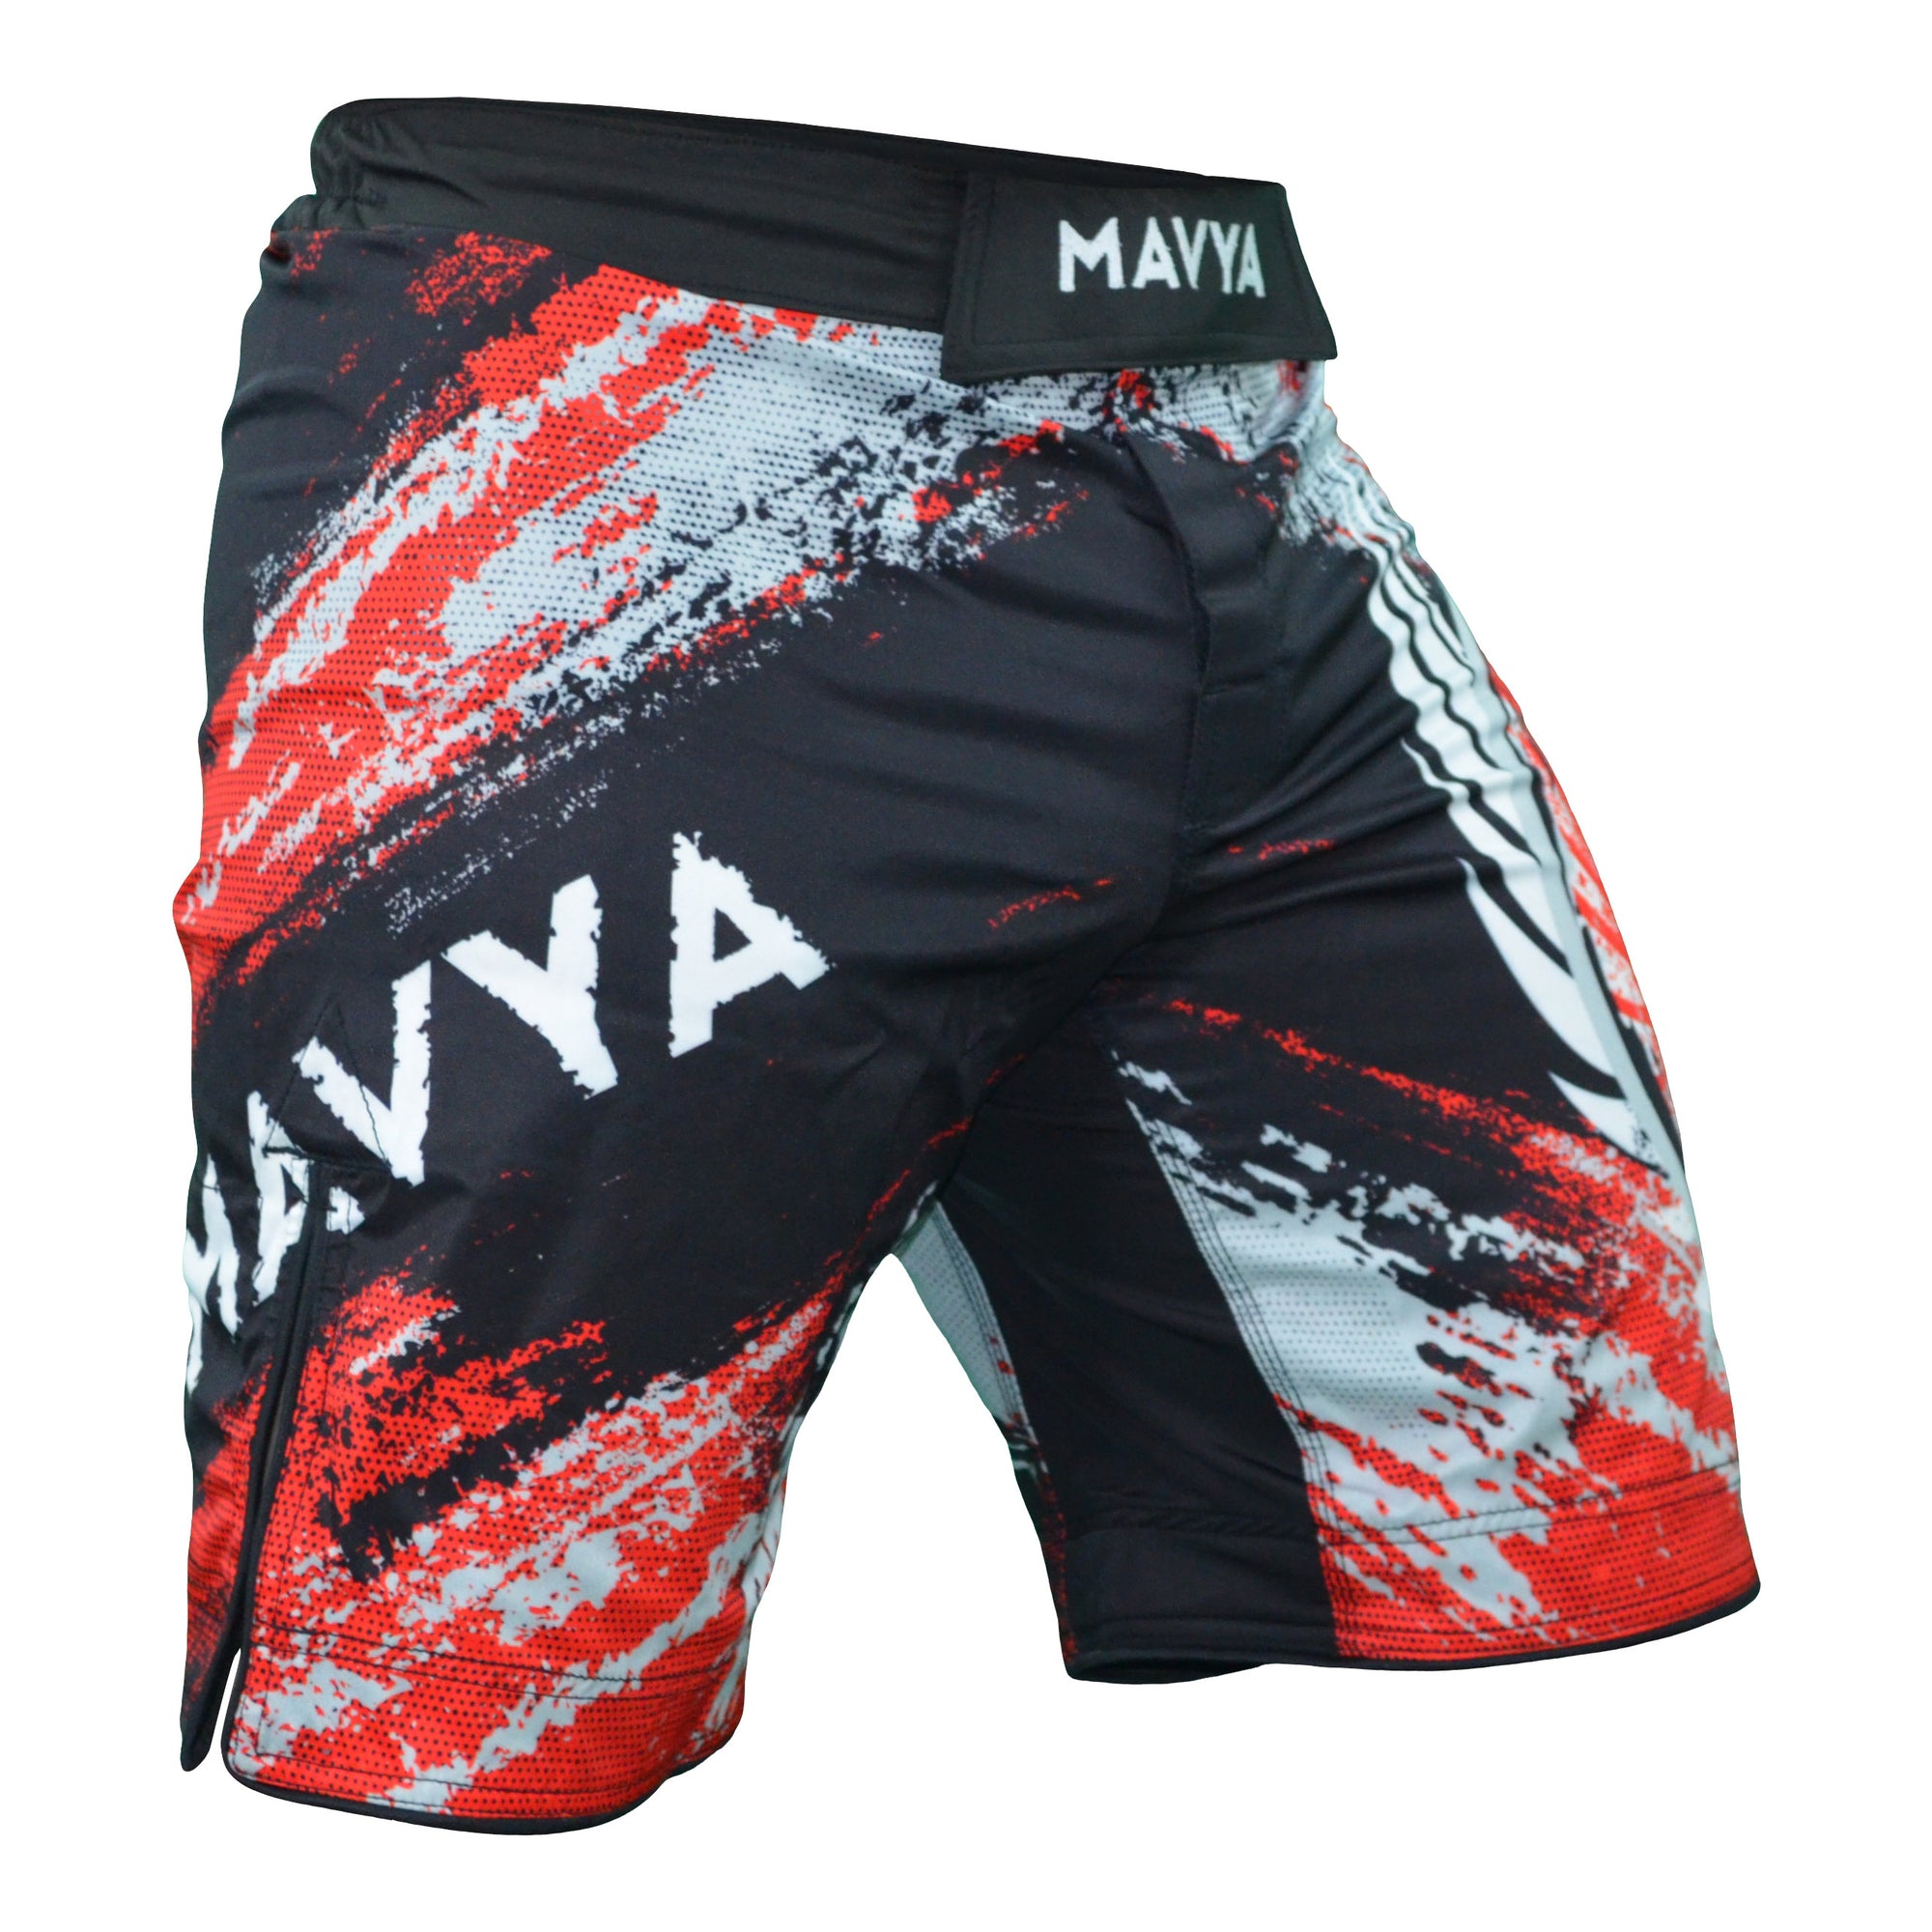 MMA Short - Mavya